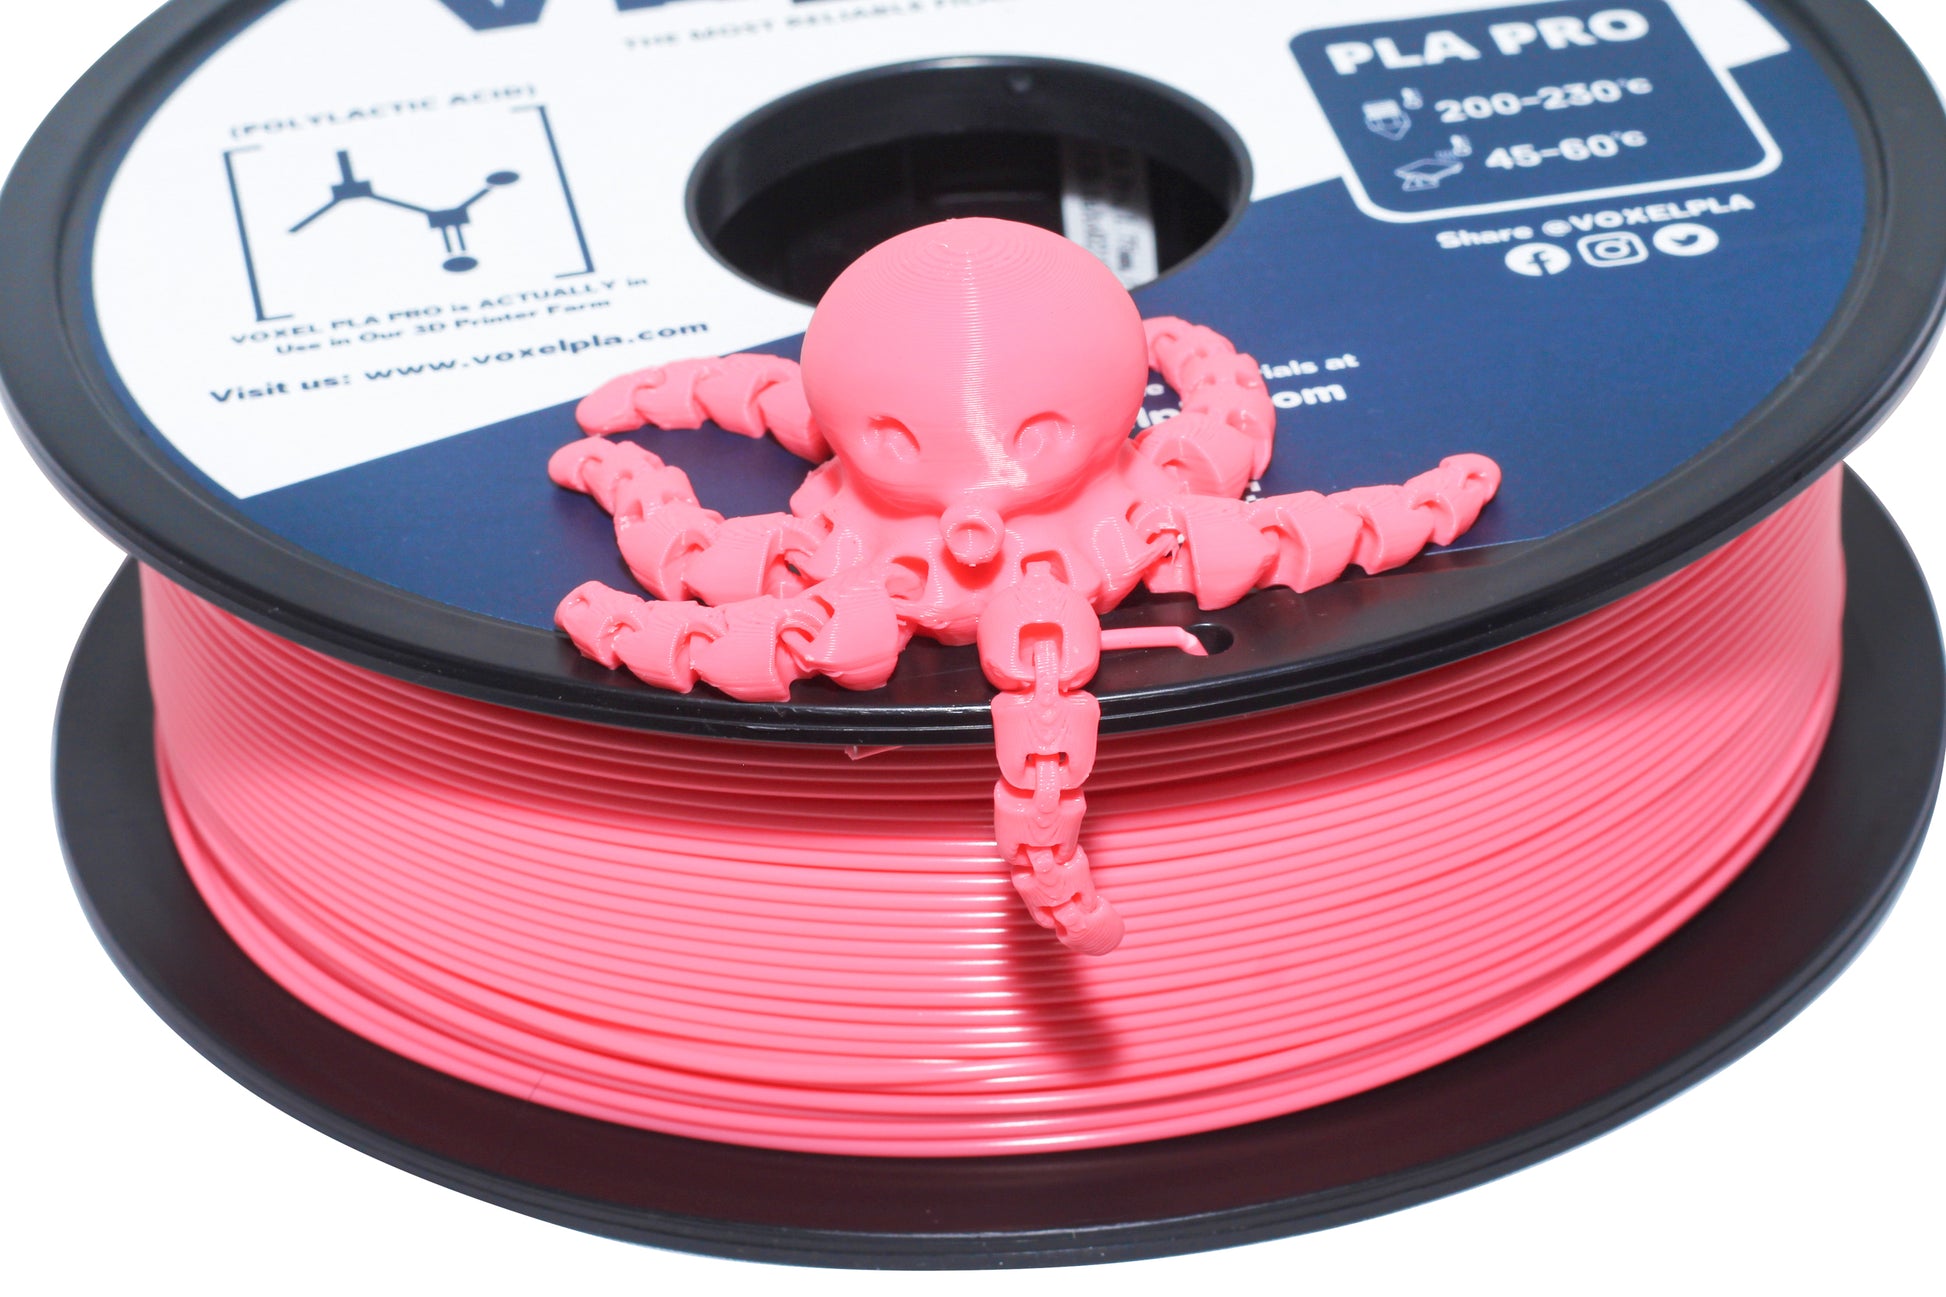 VOXELPLA PLA PLUS Pink 1.75mm for FDM 3d printer, Bambu Lab P1P, X1C, Creality, Anycubic 3D Printer